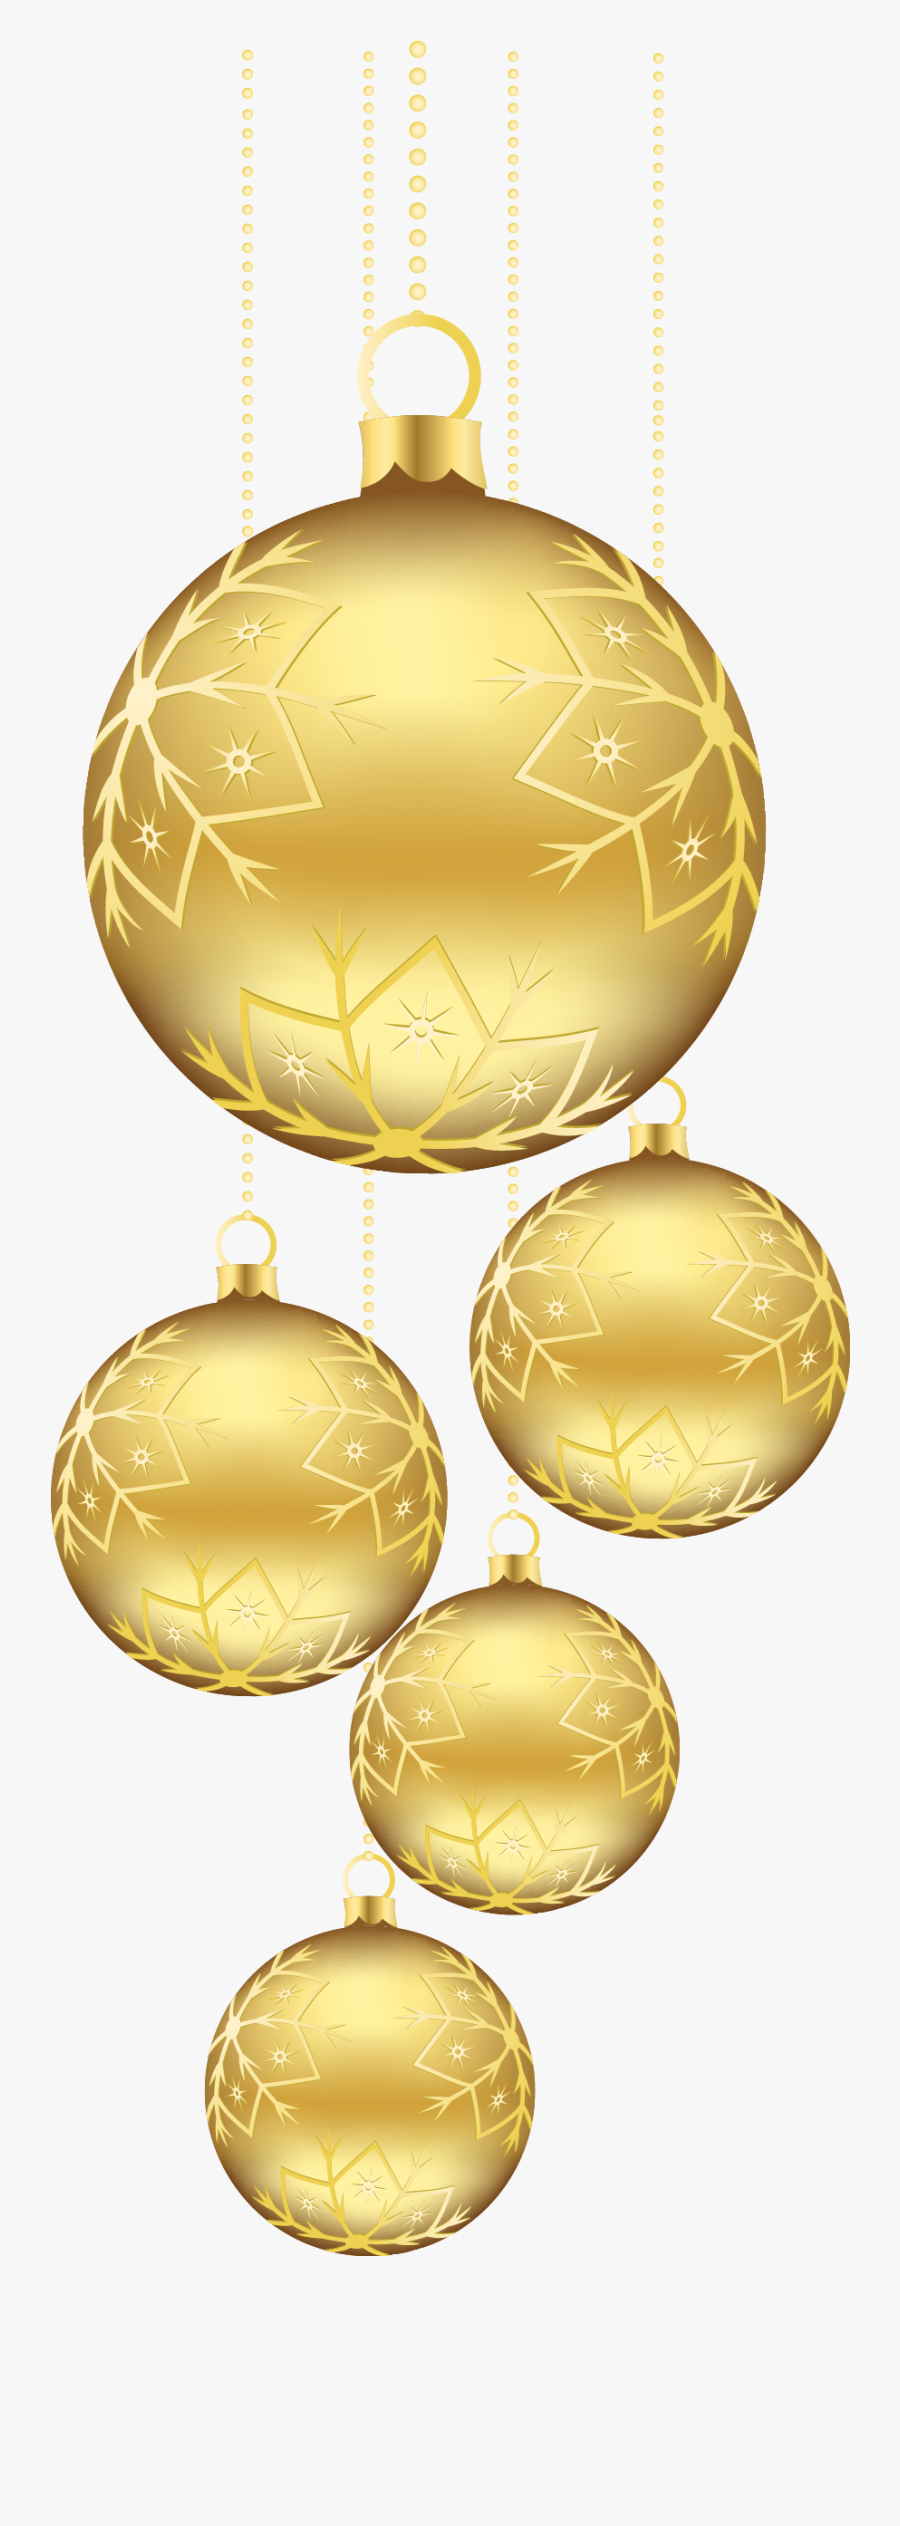 Transparent Christmas Ornaments Png - Christmas Ornaments Transparent Background, Transparent Clipart